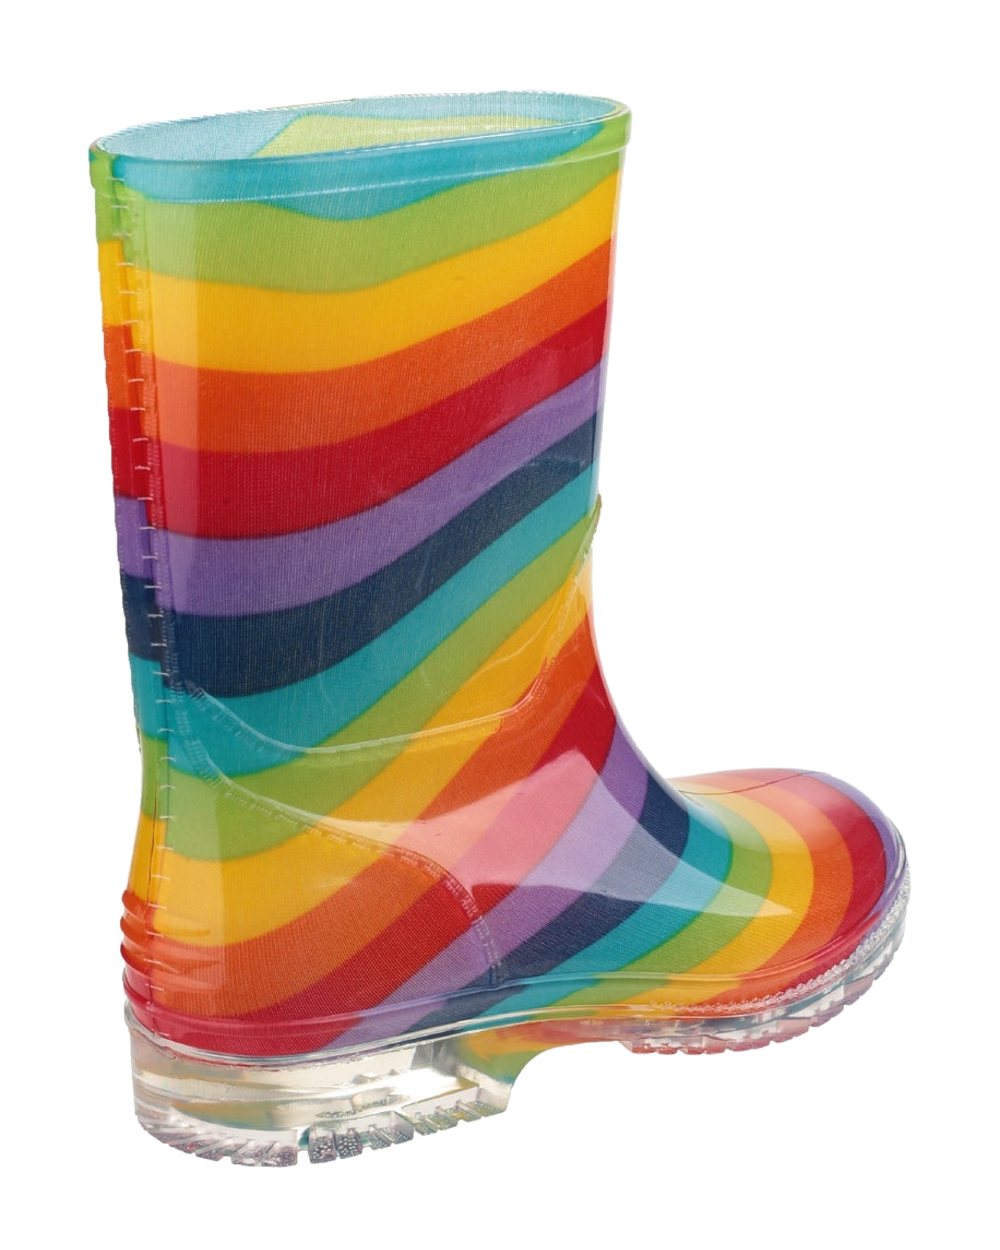 Cotswold PVC Junior Wellington Boots In Rainbow 